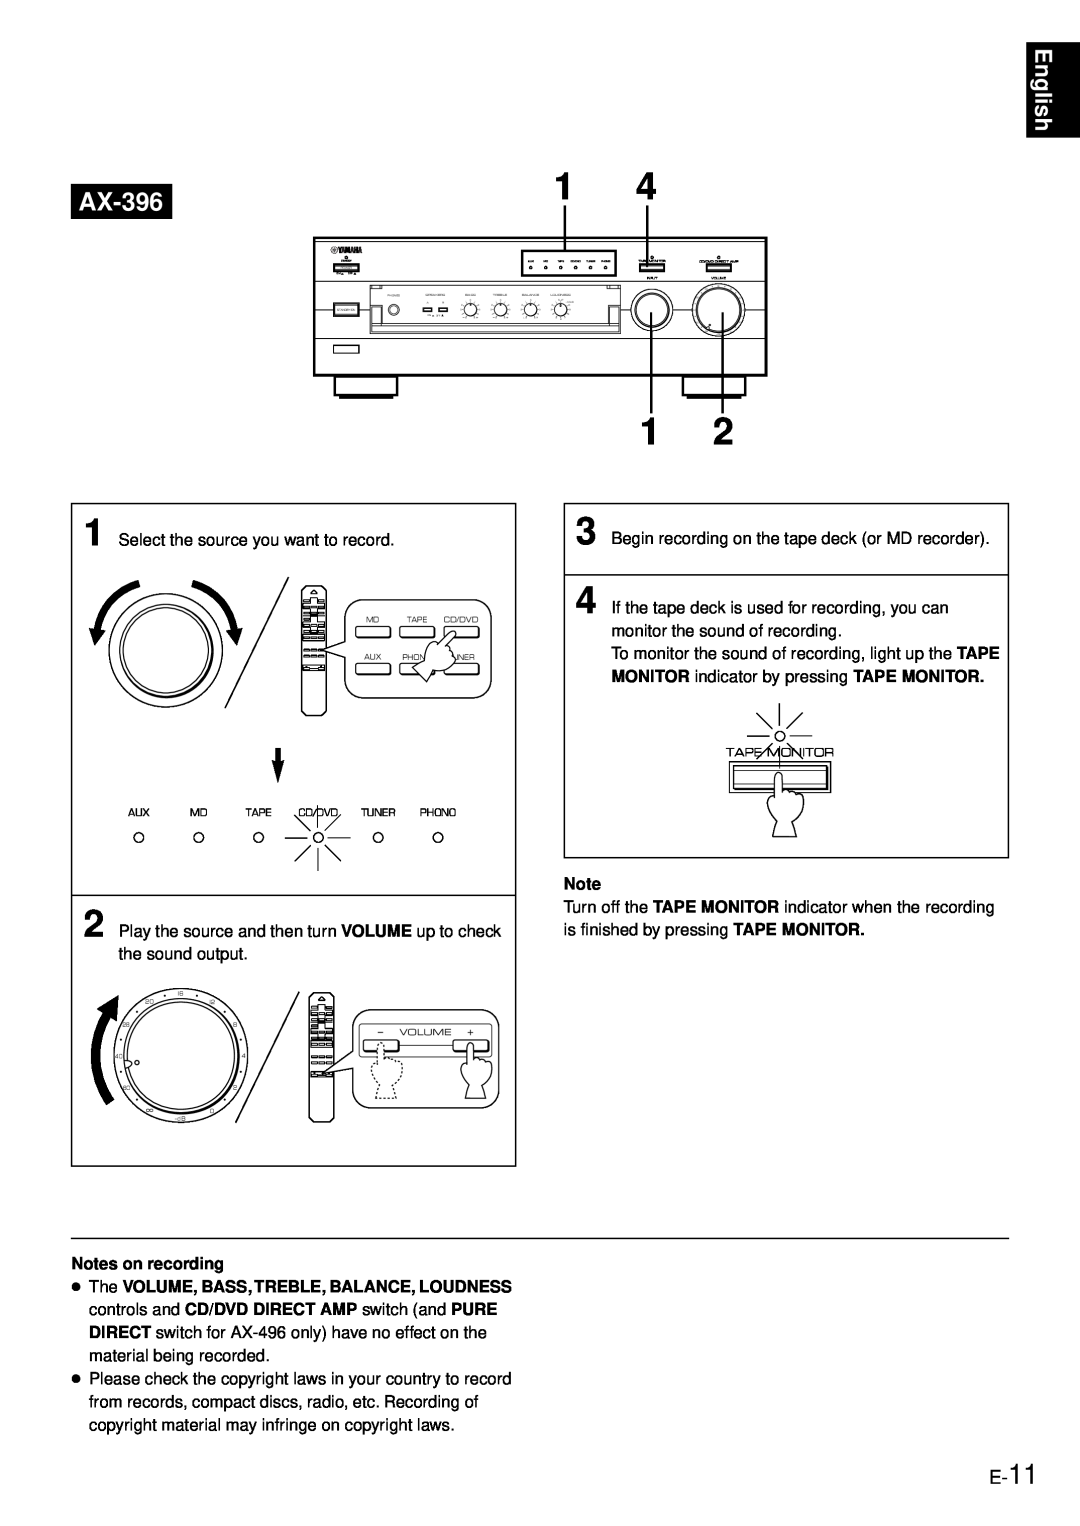 Yamaha AX-496/396 owner manual E-11, AX-396, English, Notes on recording 